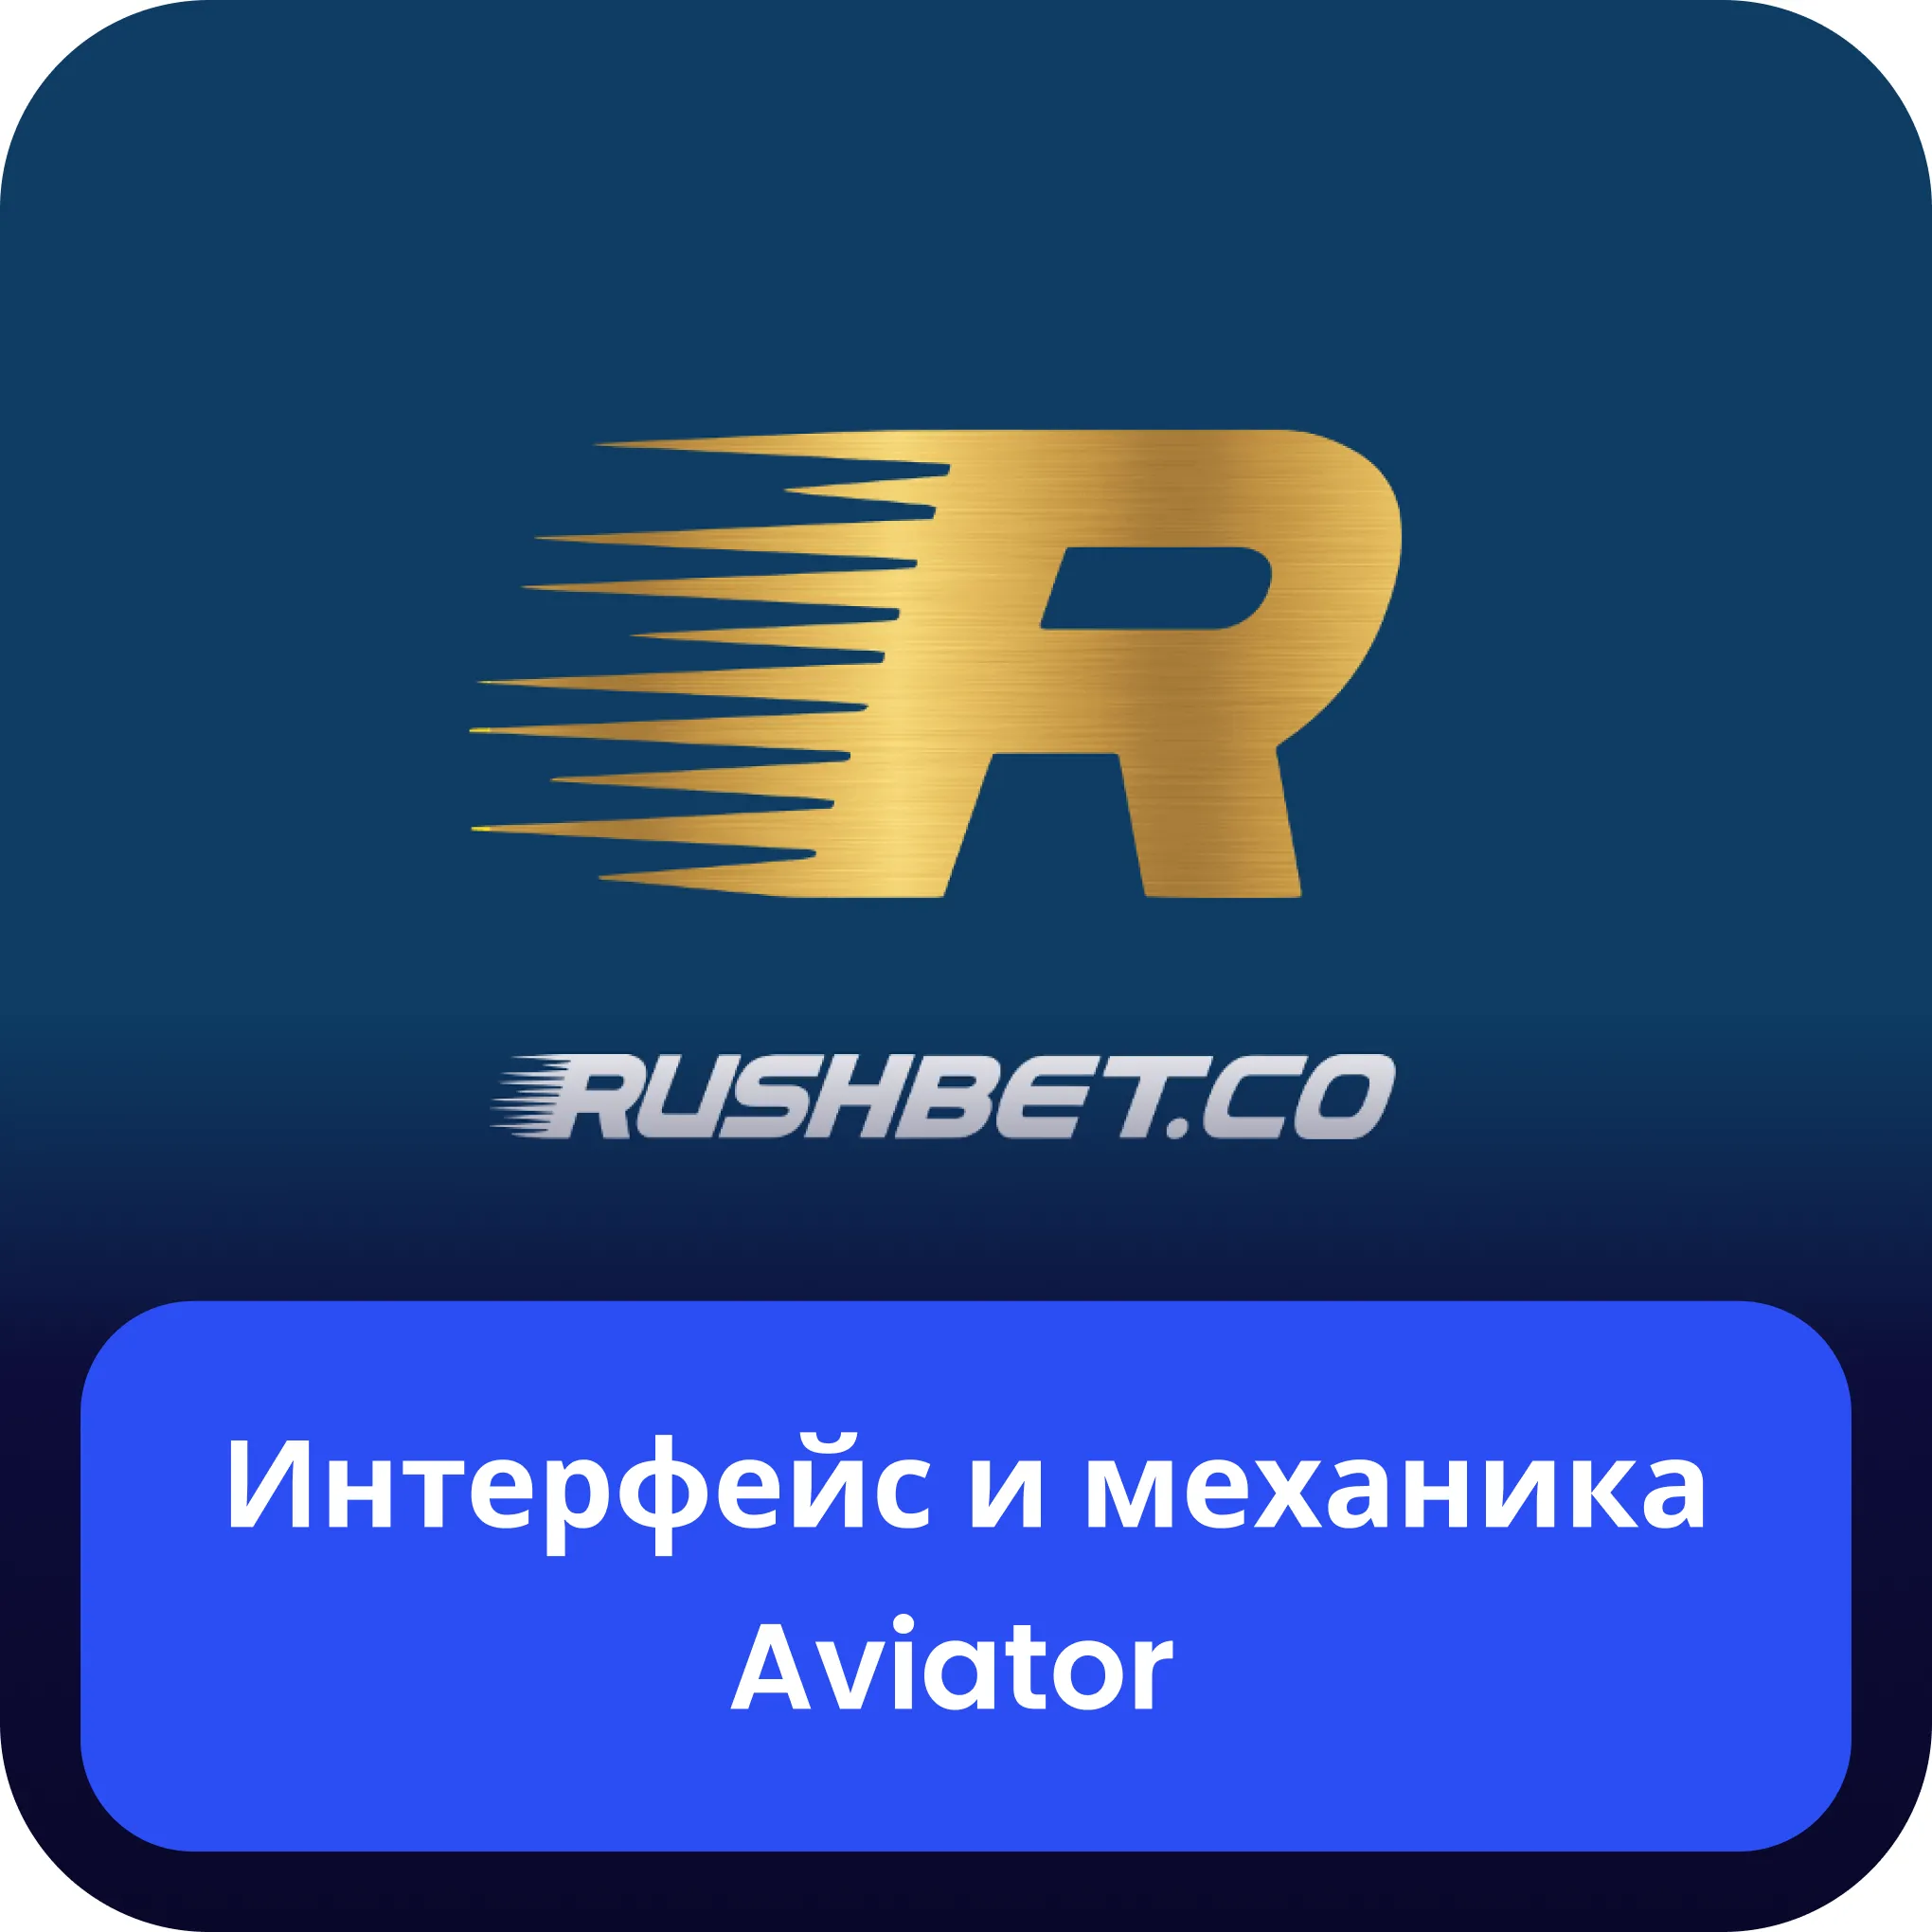 rushbet авиатор интерфейс